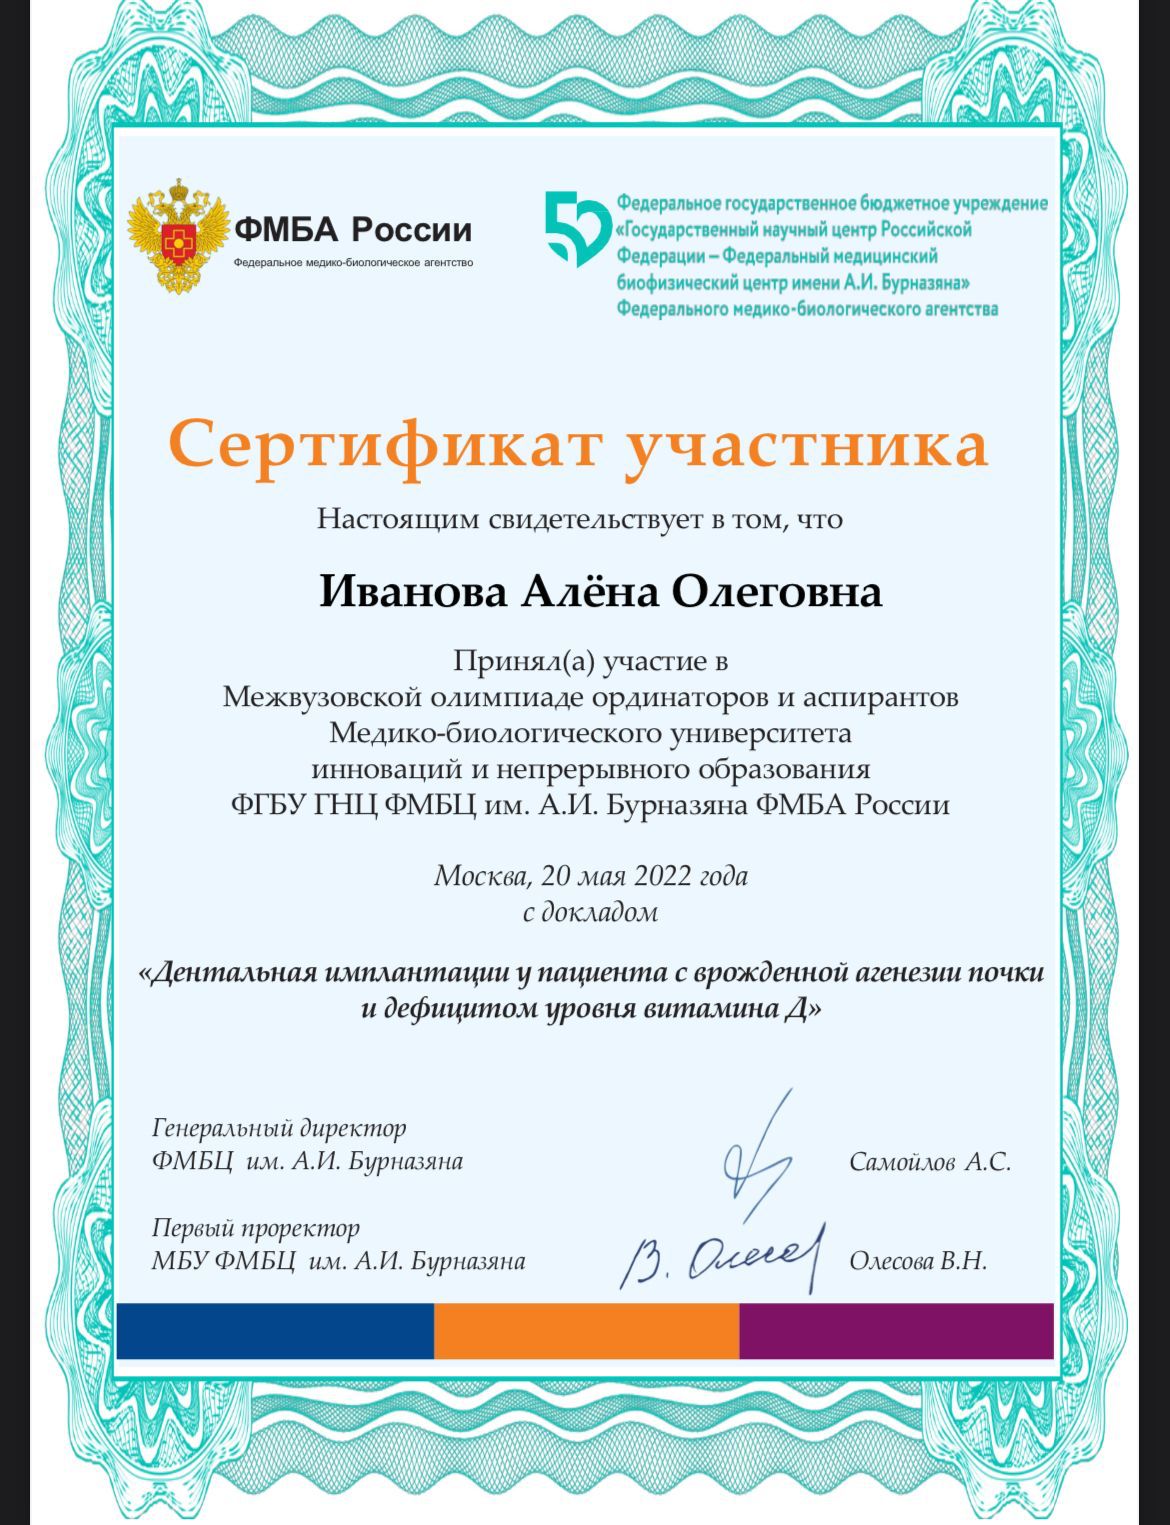 Сертификат 3 получил Иванова Алена